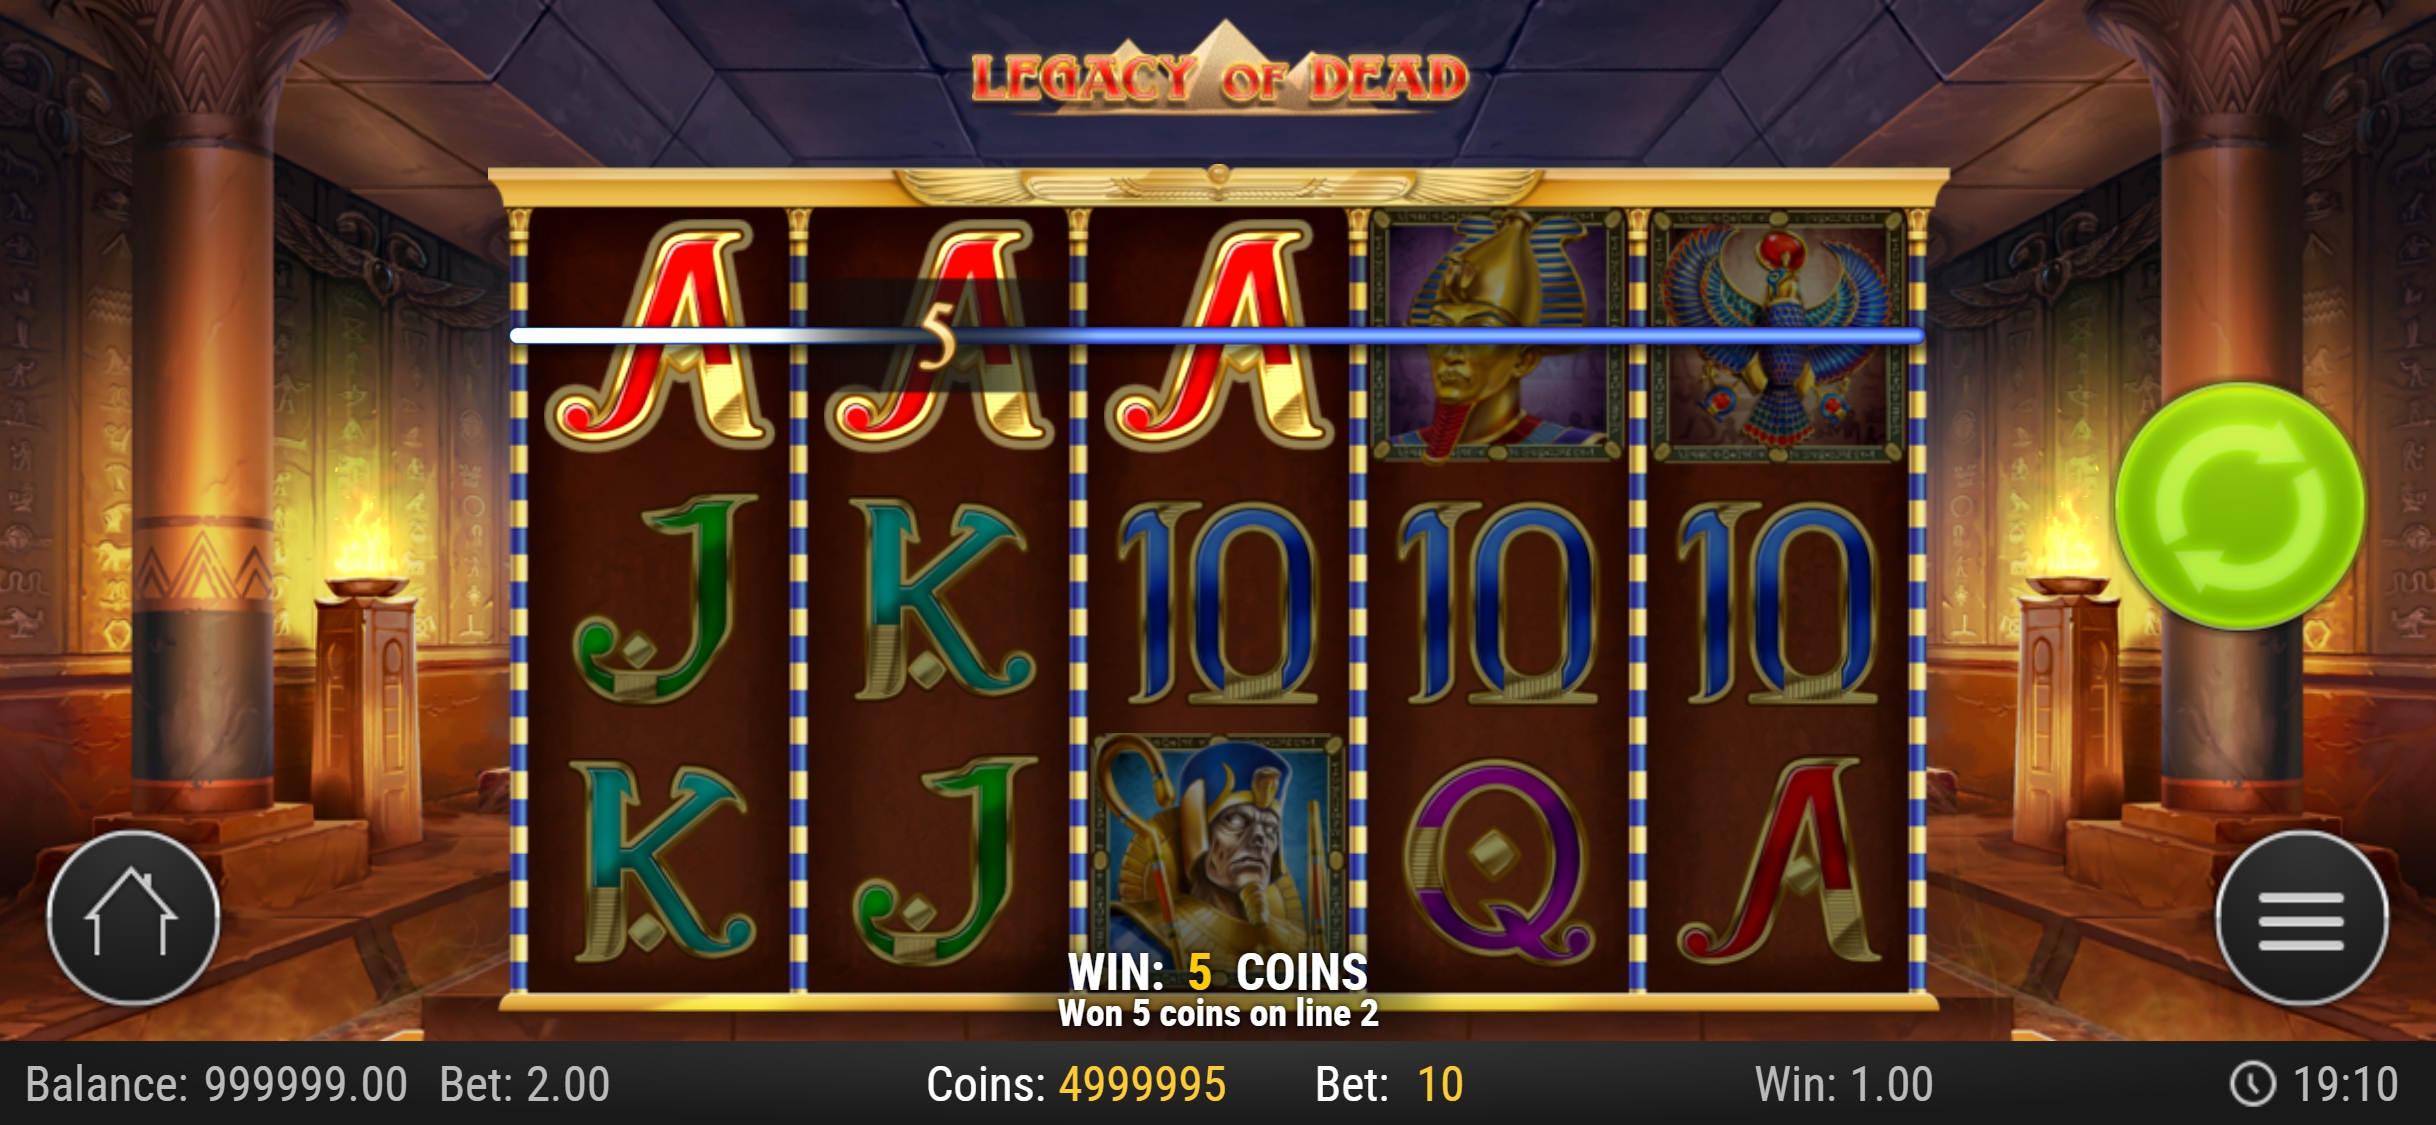 Live Casino Ireland Mobile Slot Games Review